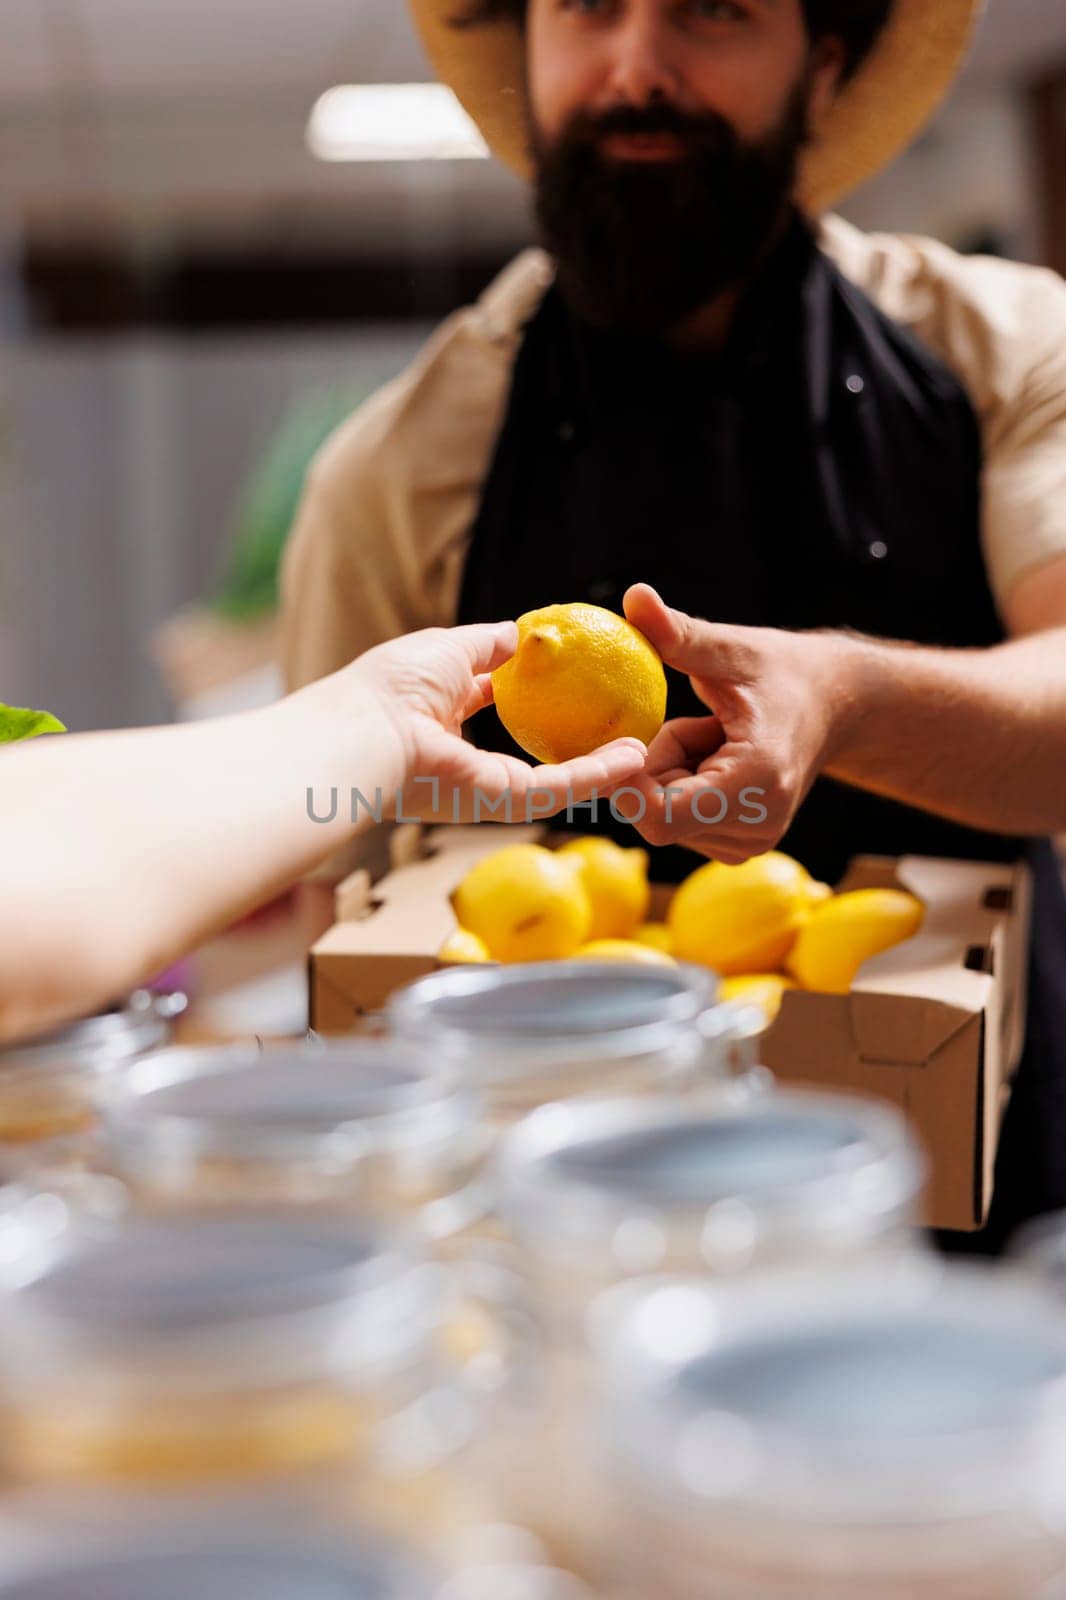 Customer shops for organic fruits by DCStudio